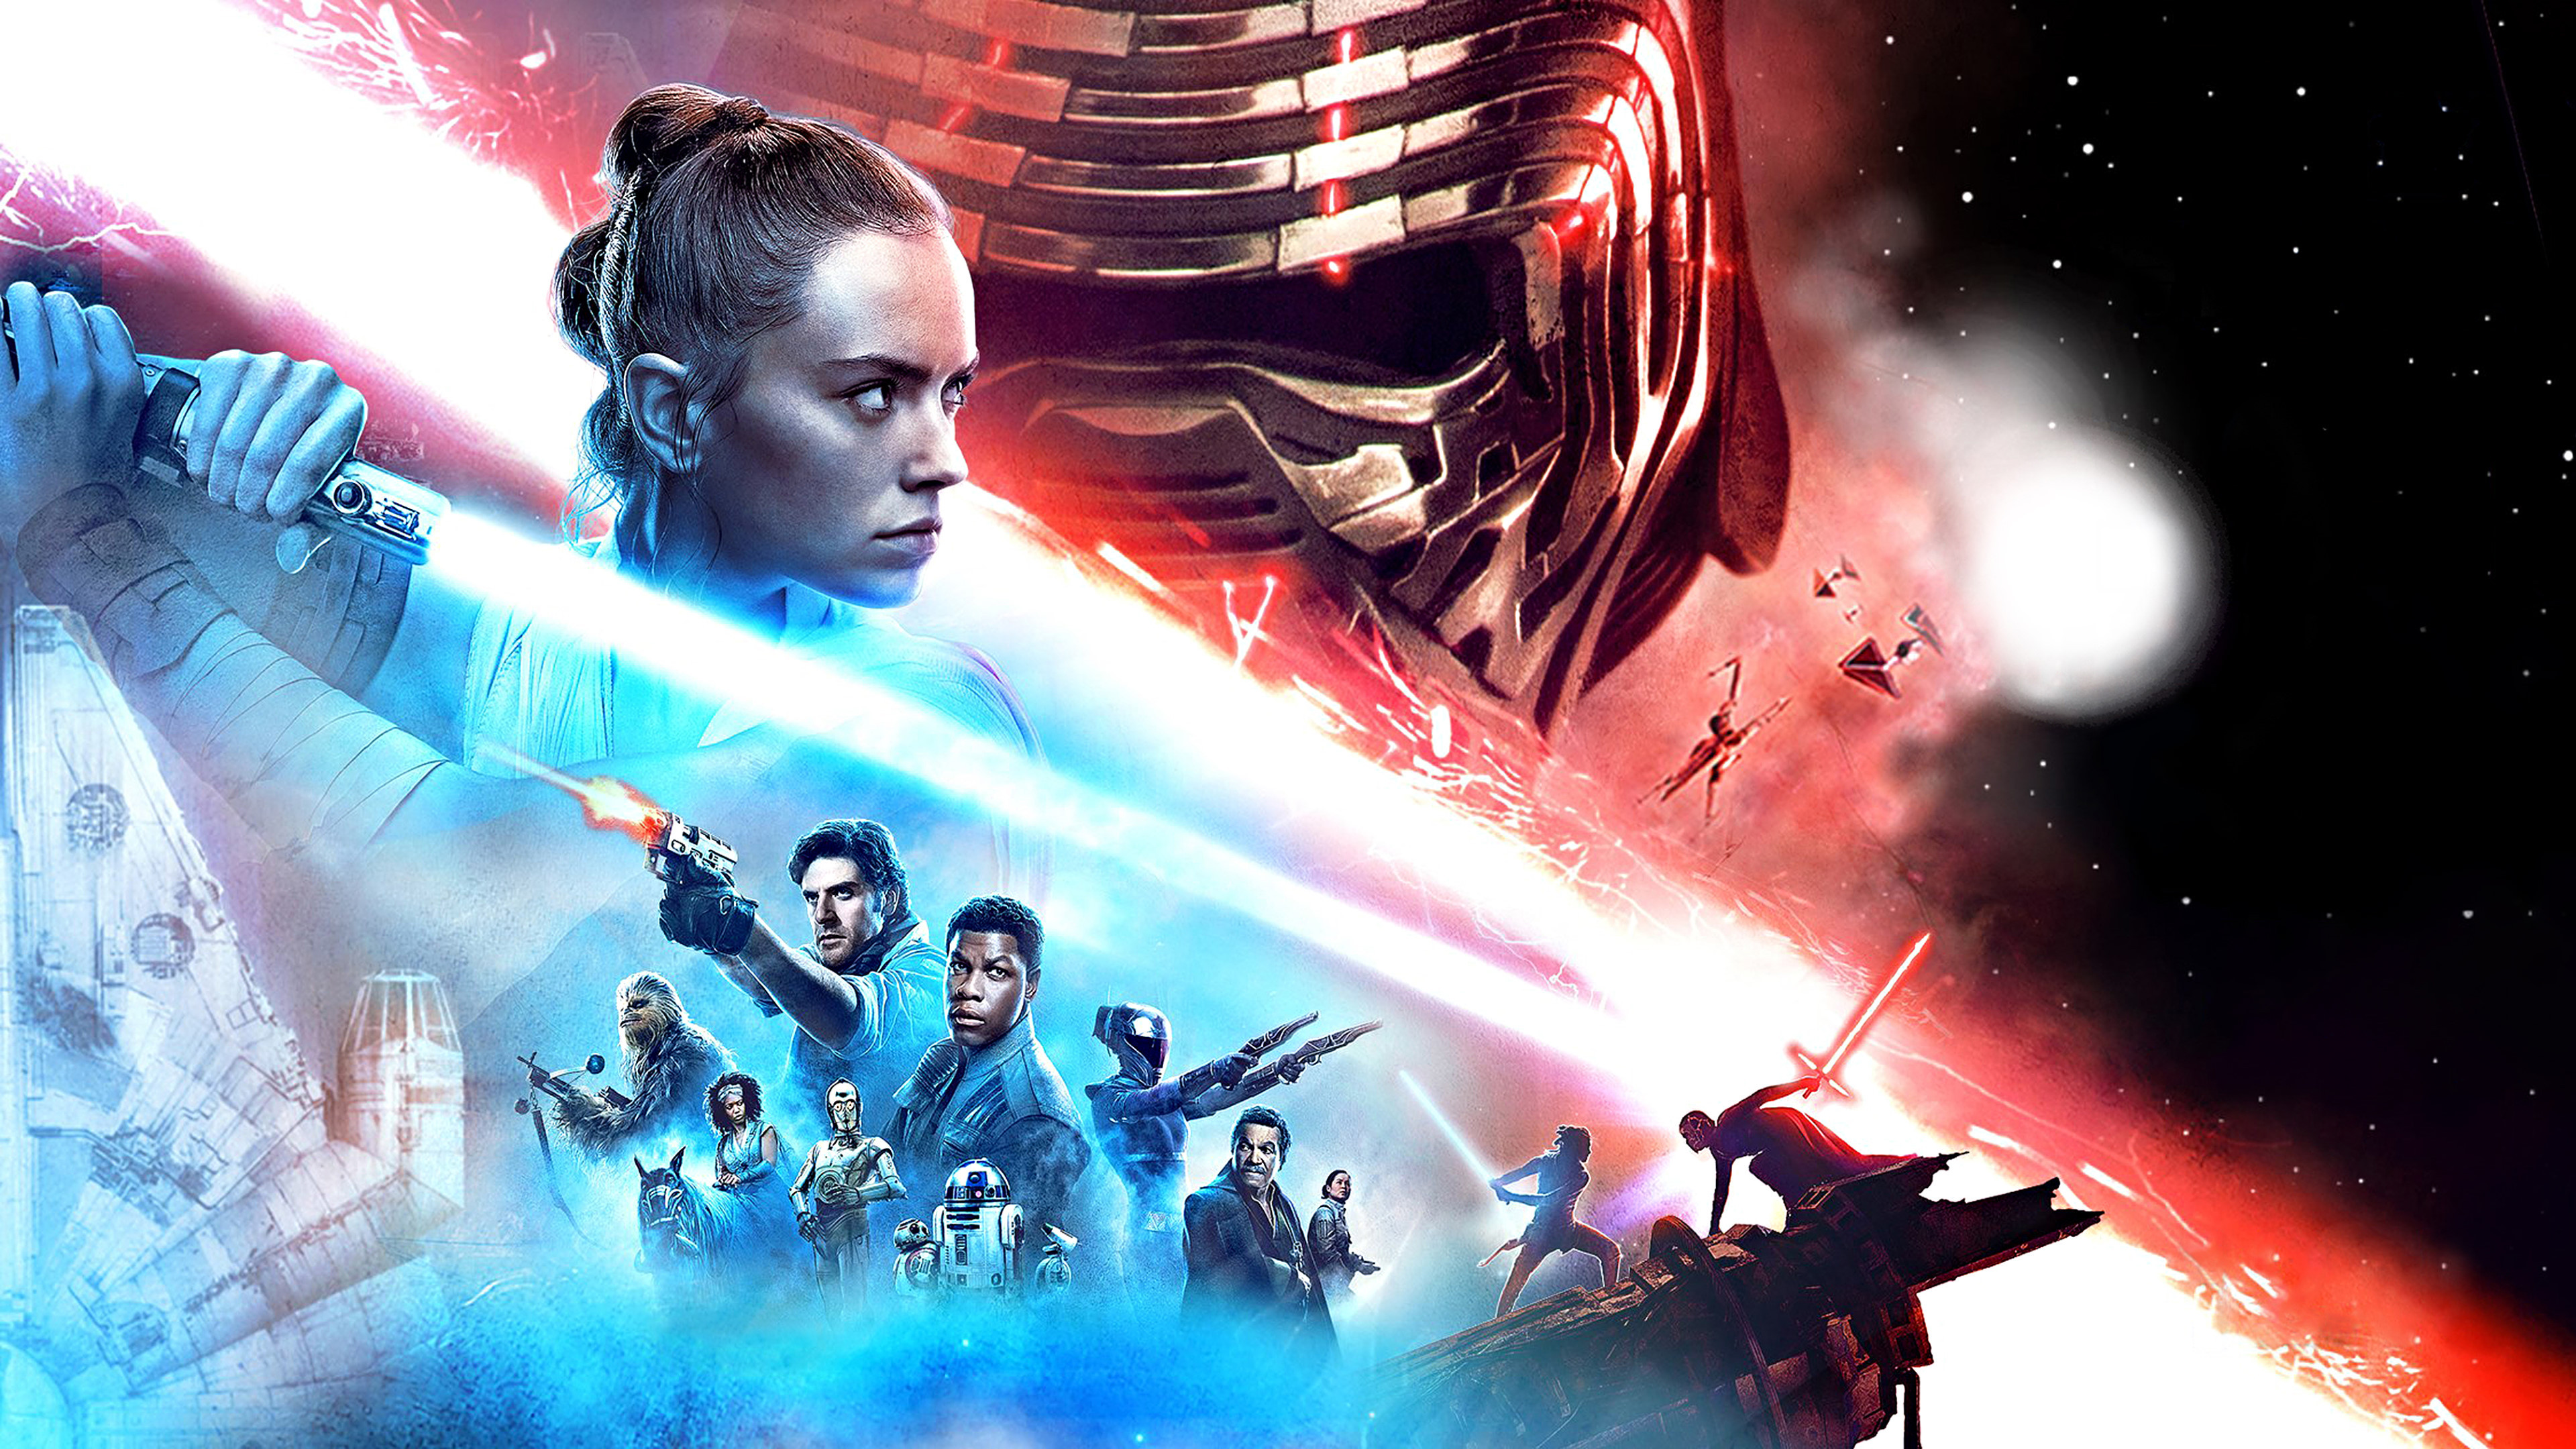 Download wallpaper: Episode IX Star Wars: The Rise of Skywalker